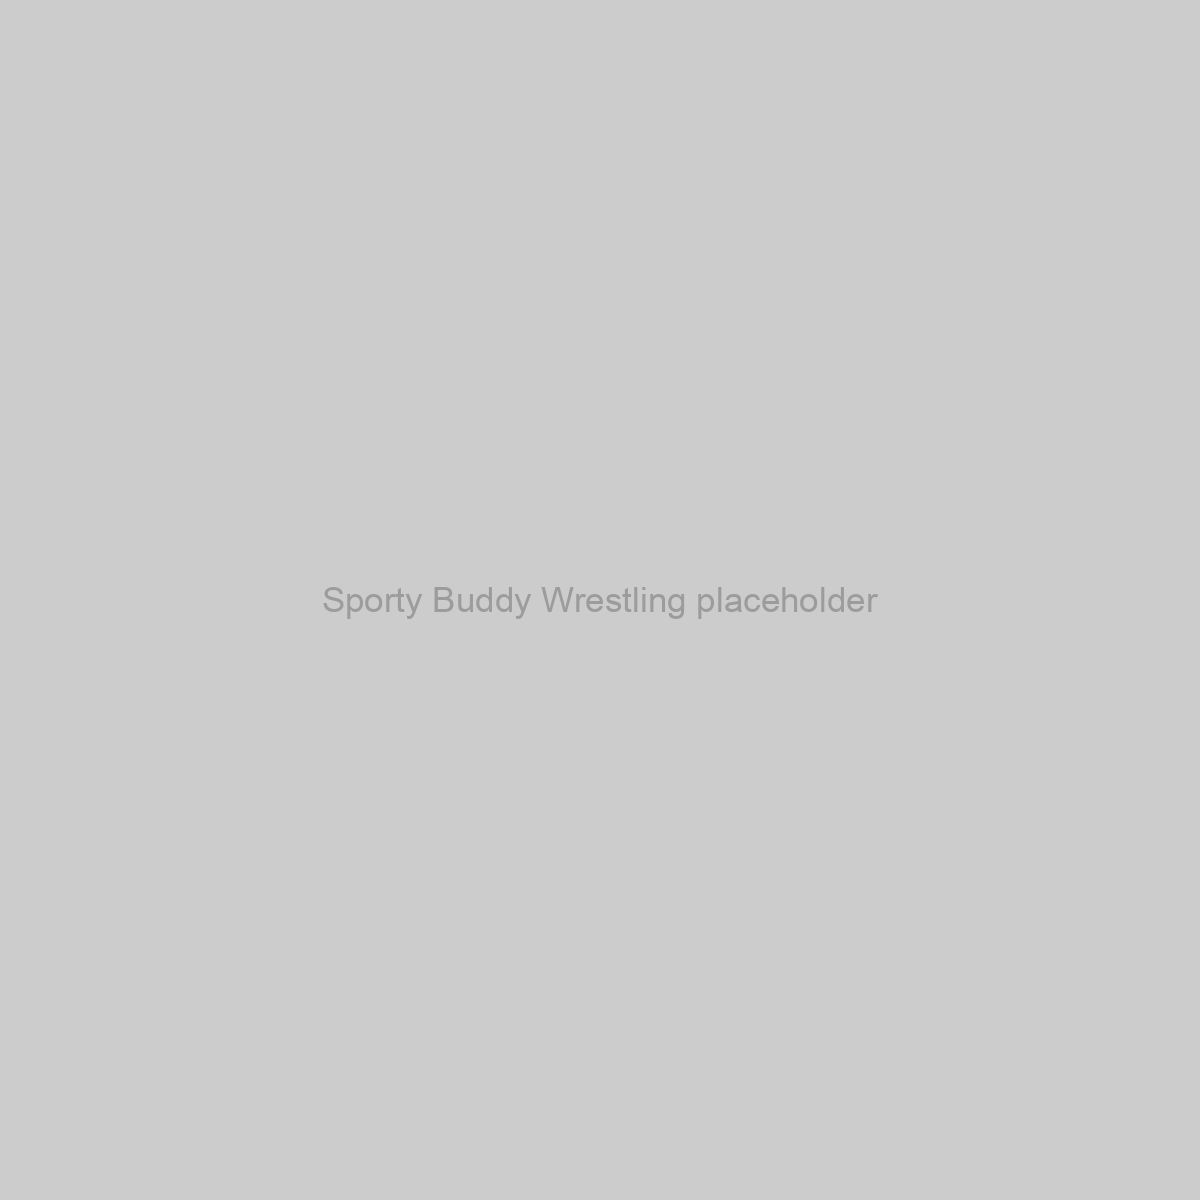 Sporty Buddy Wrestling Placeholder Image